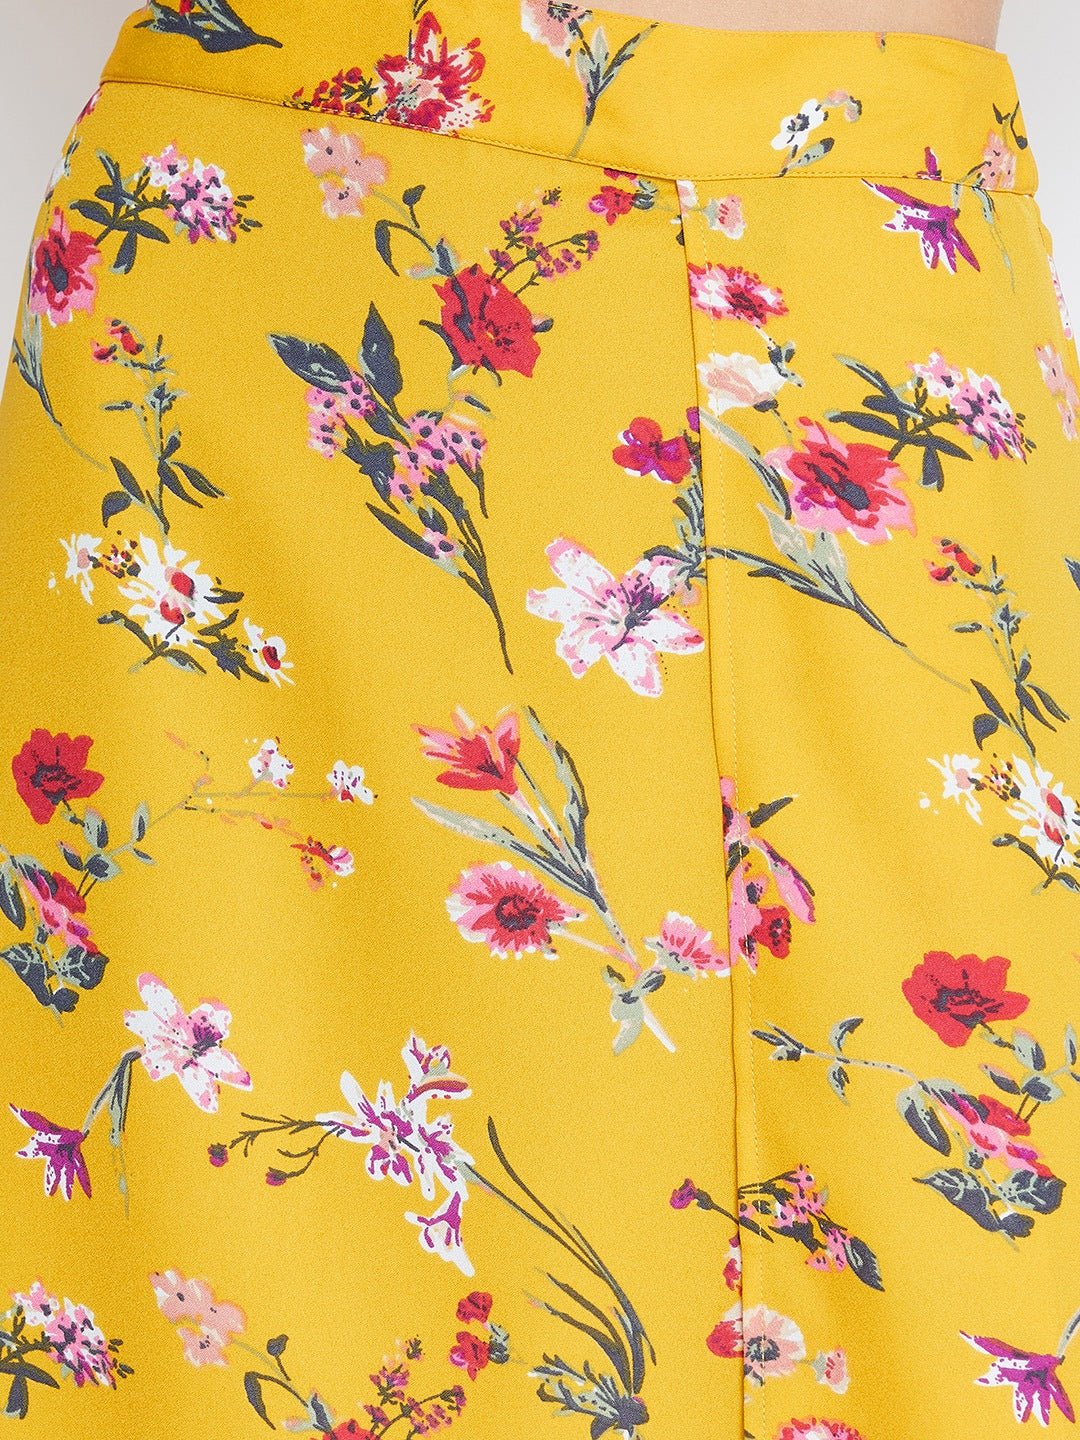 Folk Republic Women Yellow Floral Printed Off-Shoulder Co-Ordinate Maxi Dress - #folk republic#